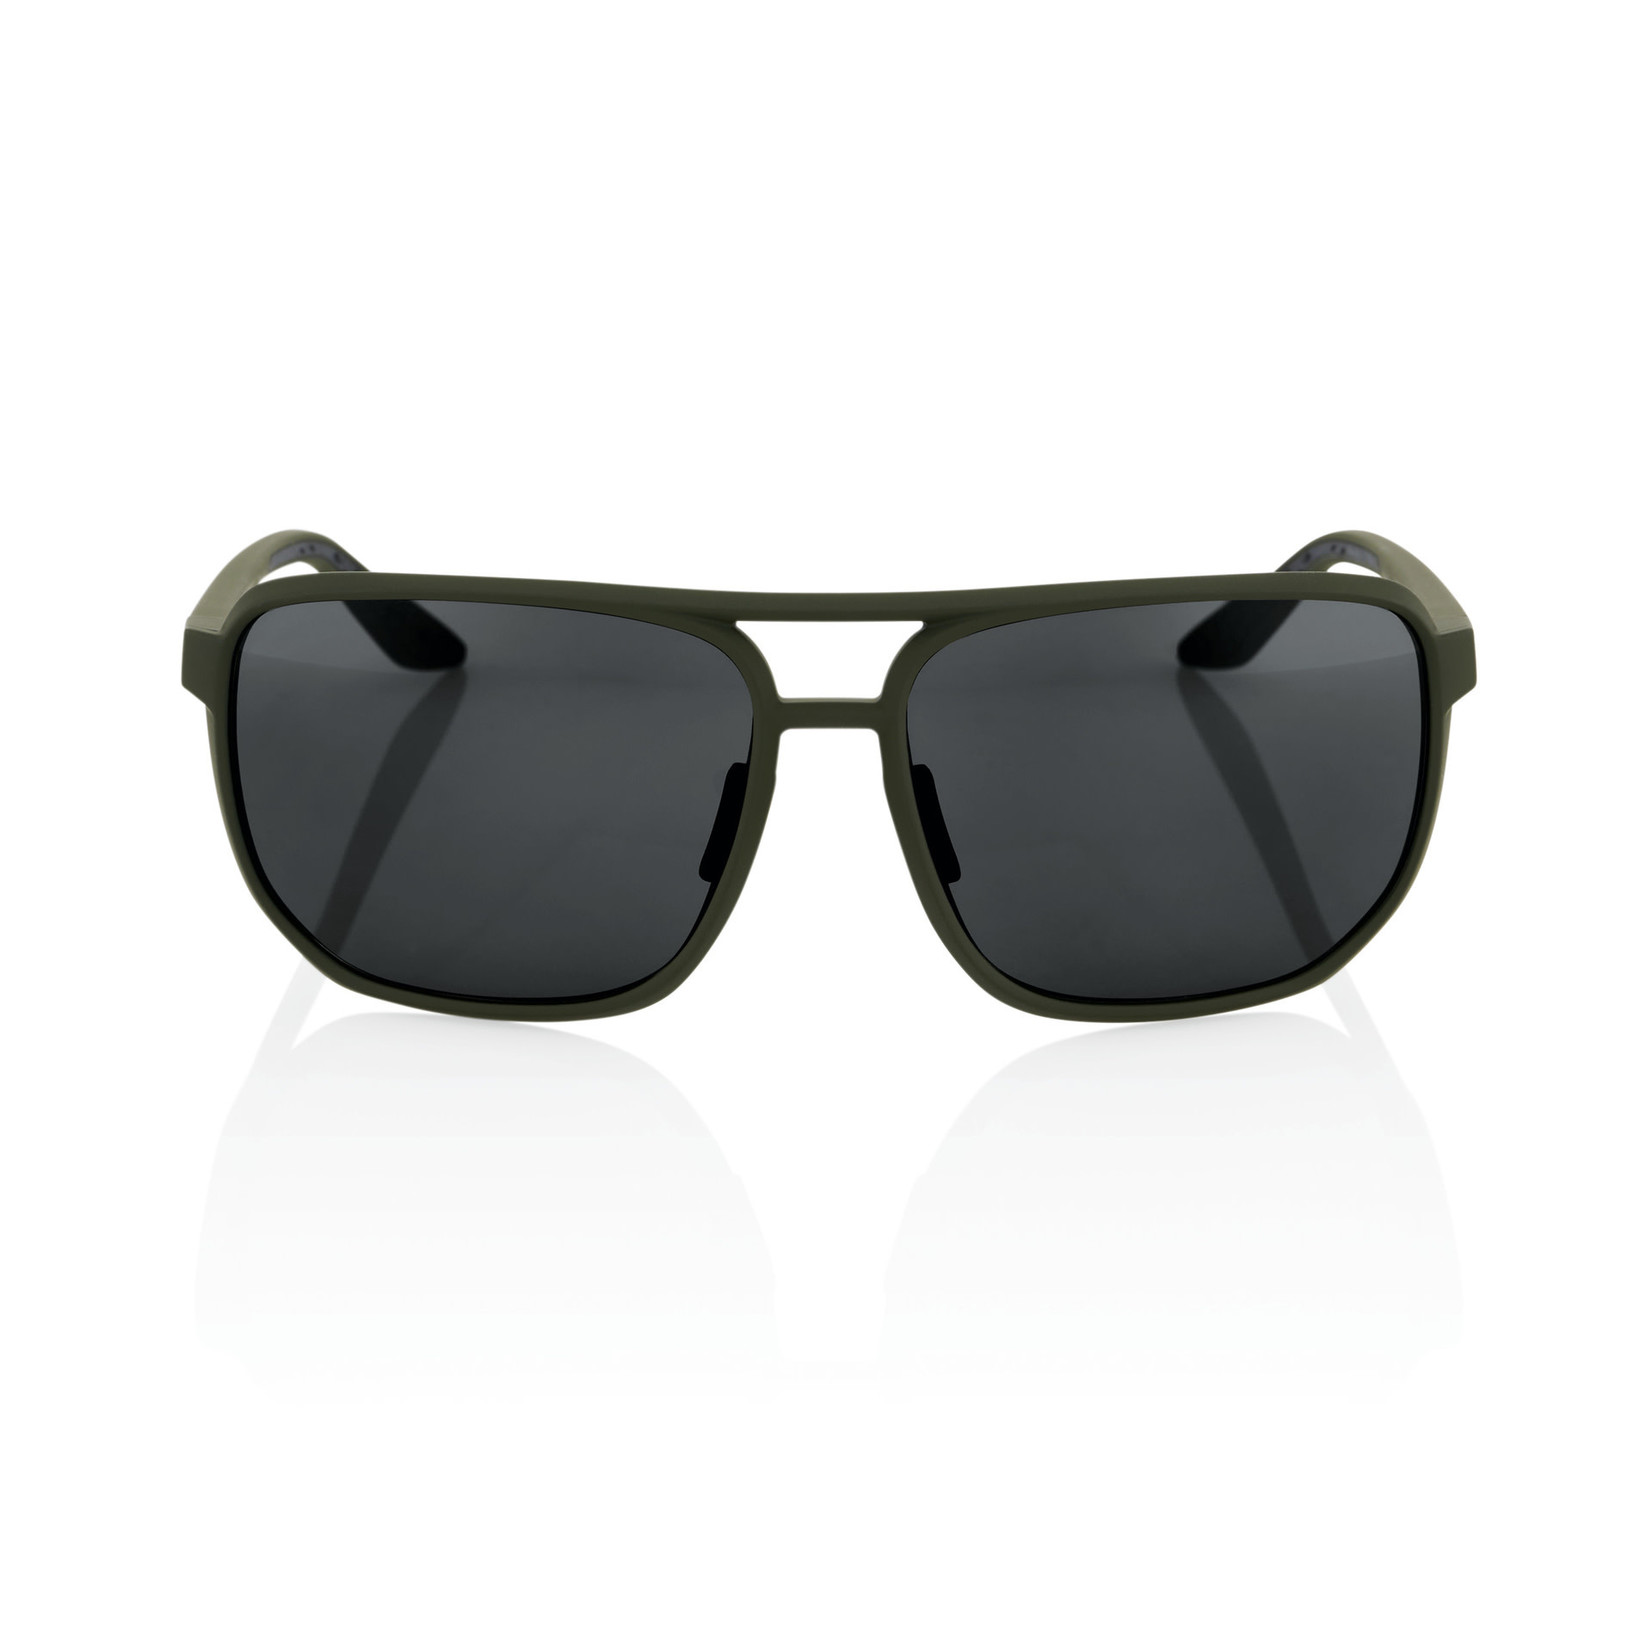 100 Percent 100% Konnor 100% UV Protection Bike Eyewear - Soft Tact Army Green - Smoke